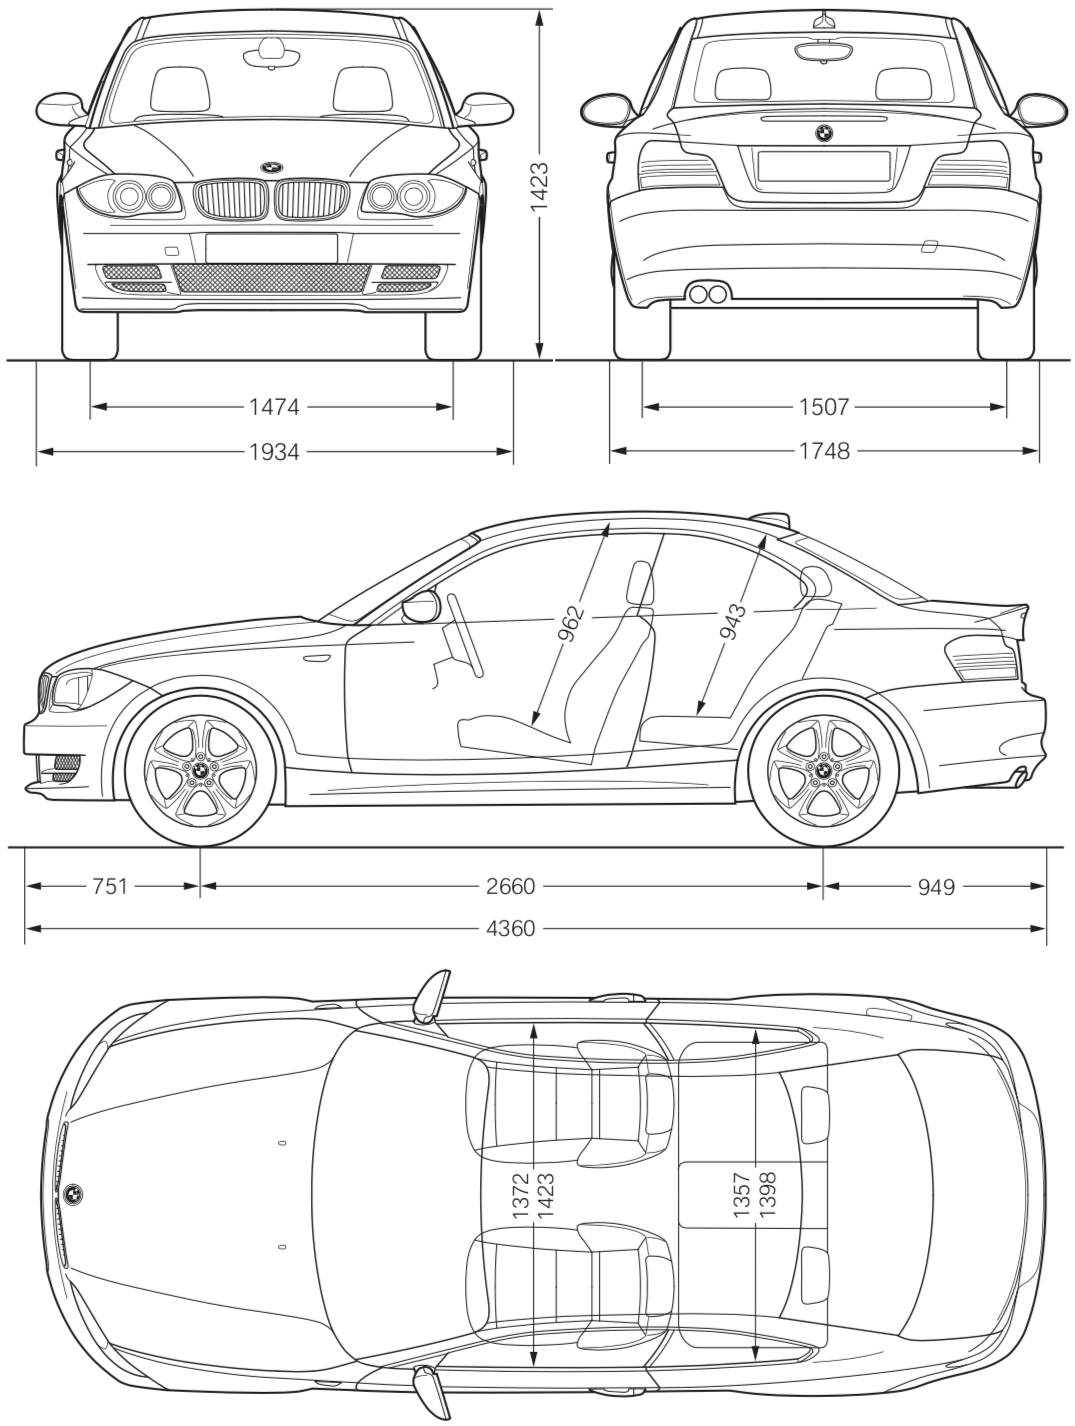 BMW 1er E82 Coupe 120i 125i 135i 118d 120d 123d Prospekt Brochure von 2/2010 